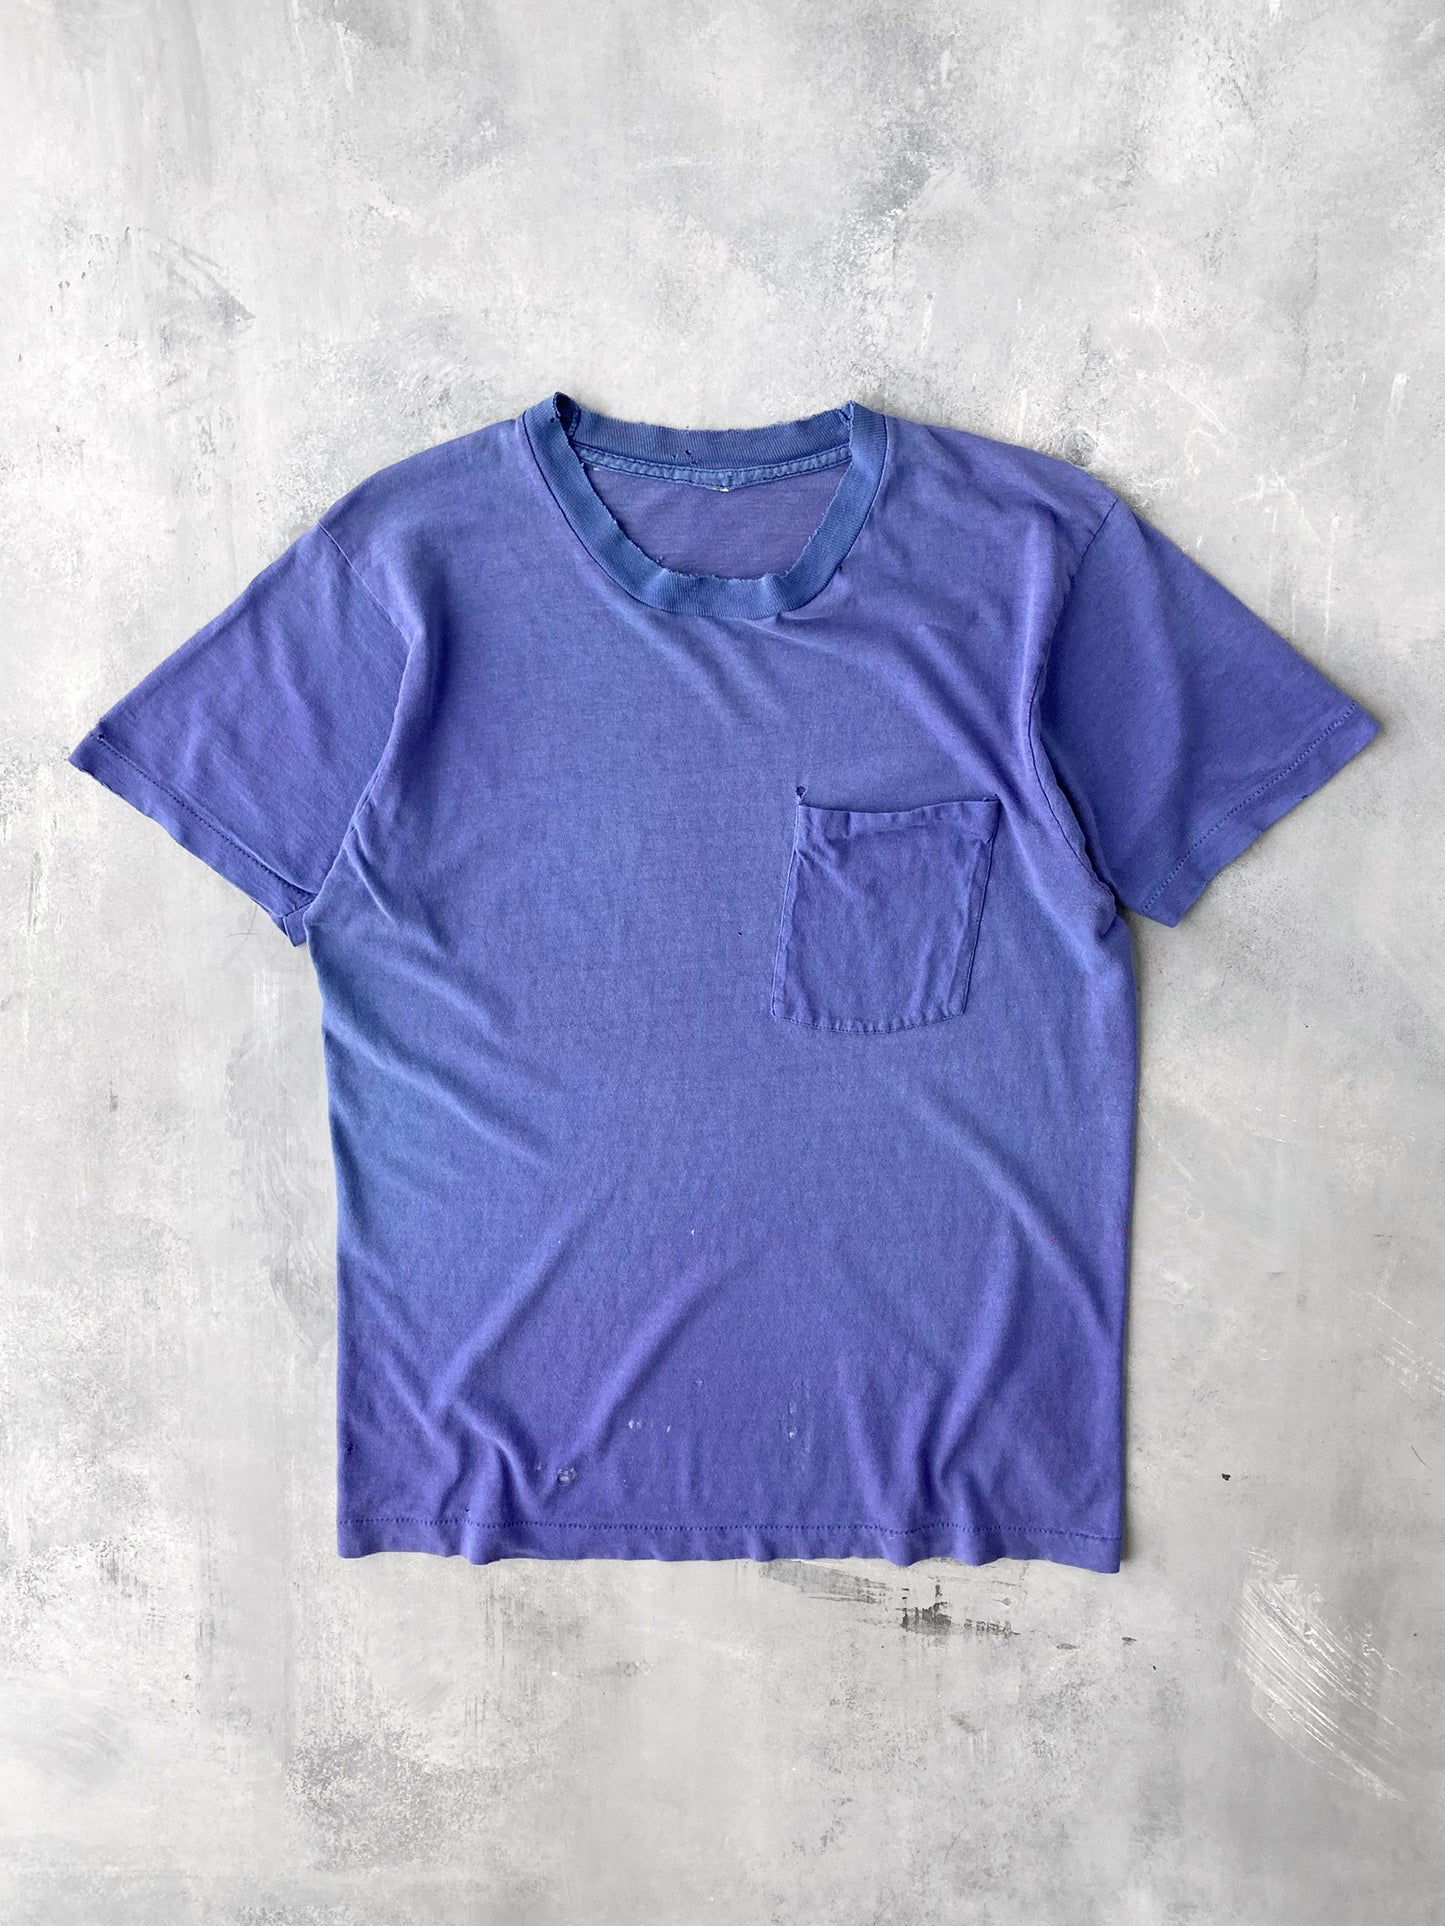 Thrashed Blue Pocket T-Shirt 80's - Medium